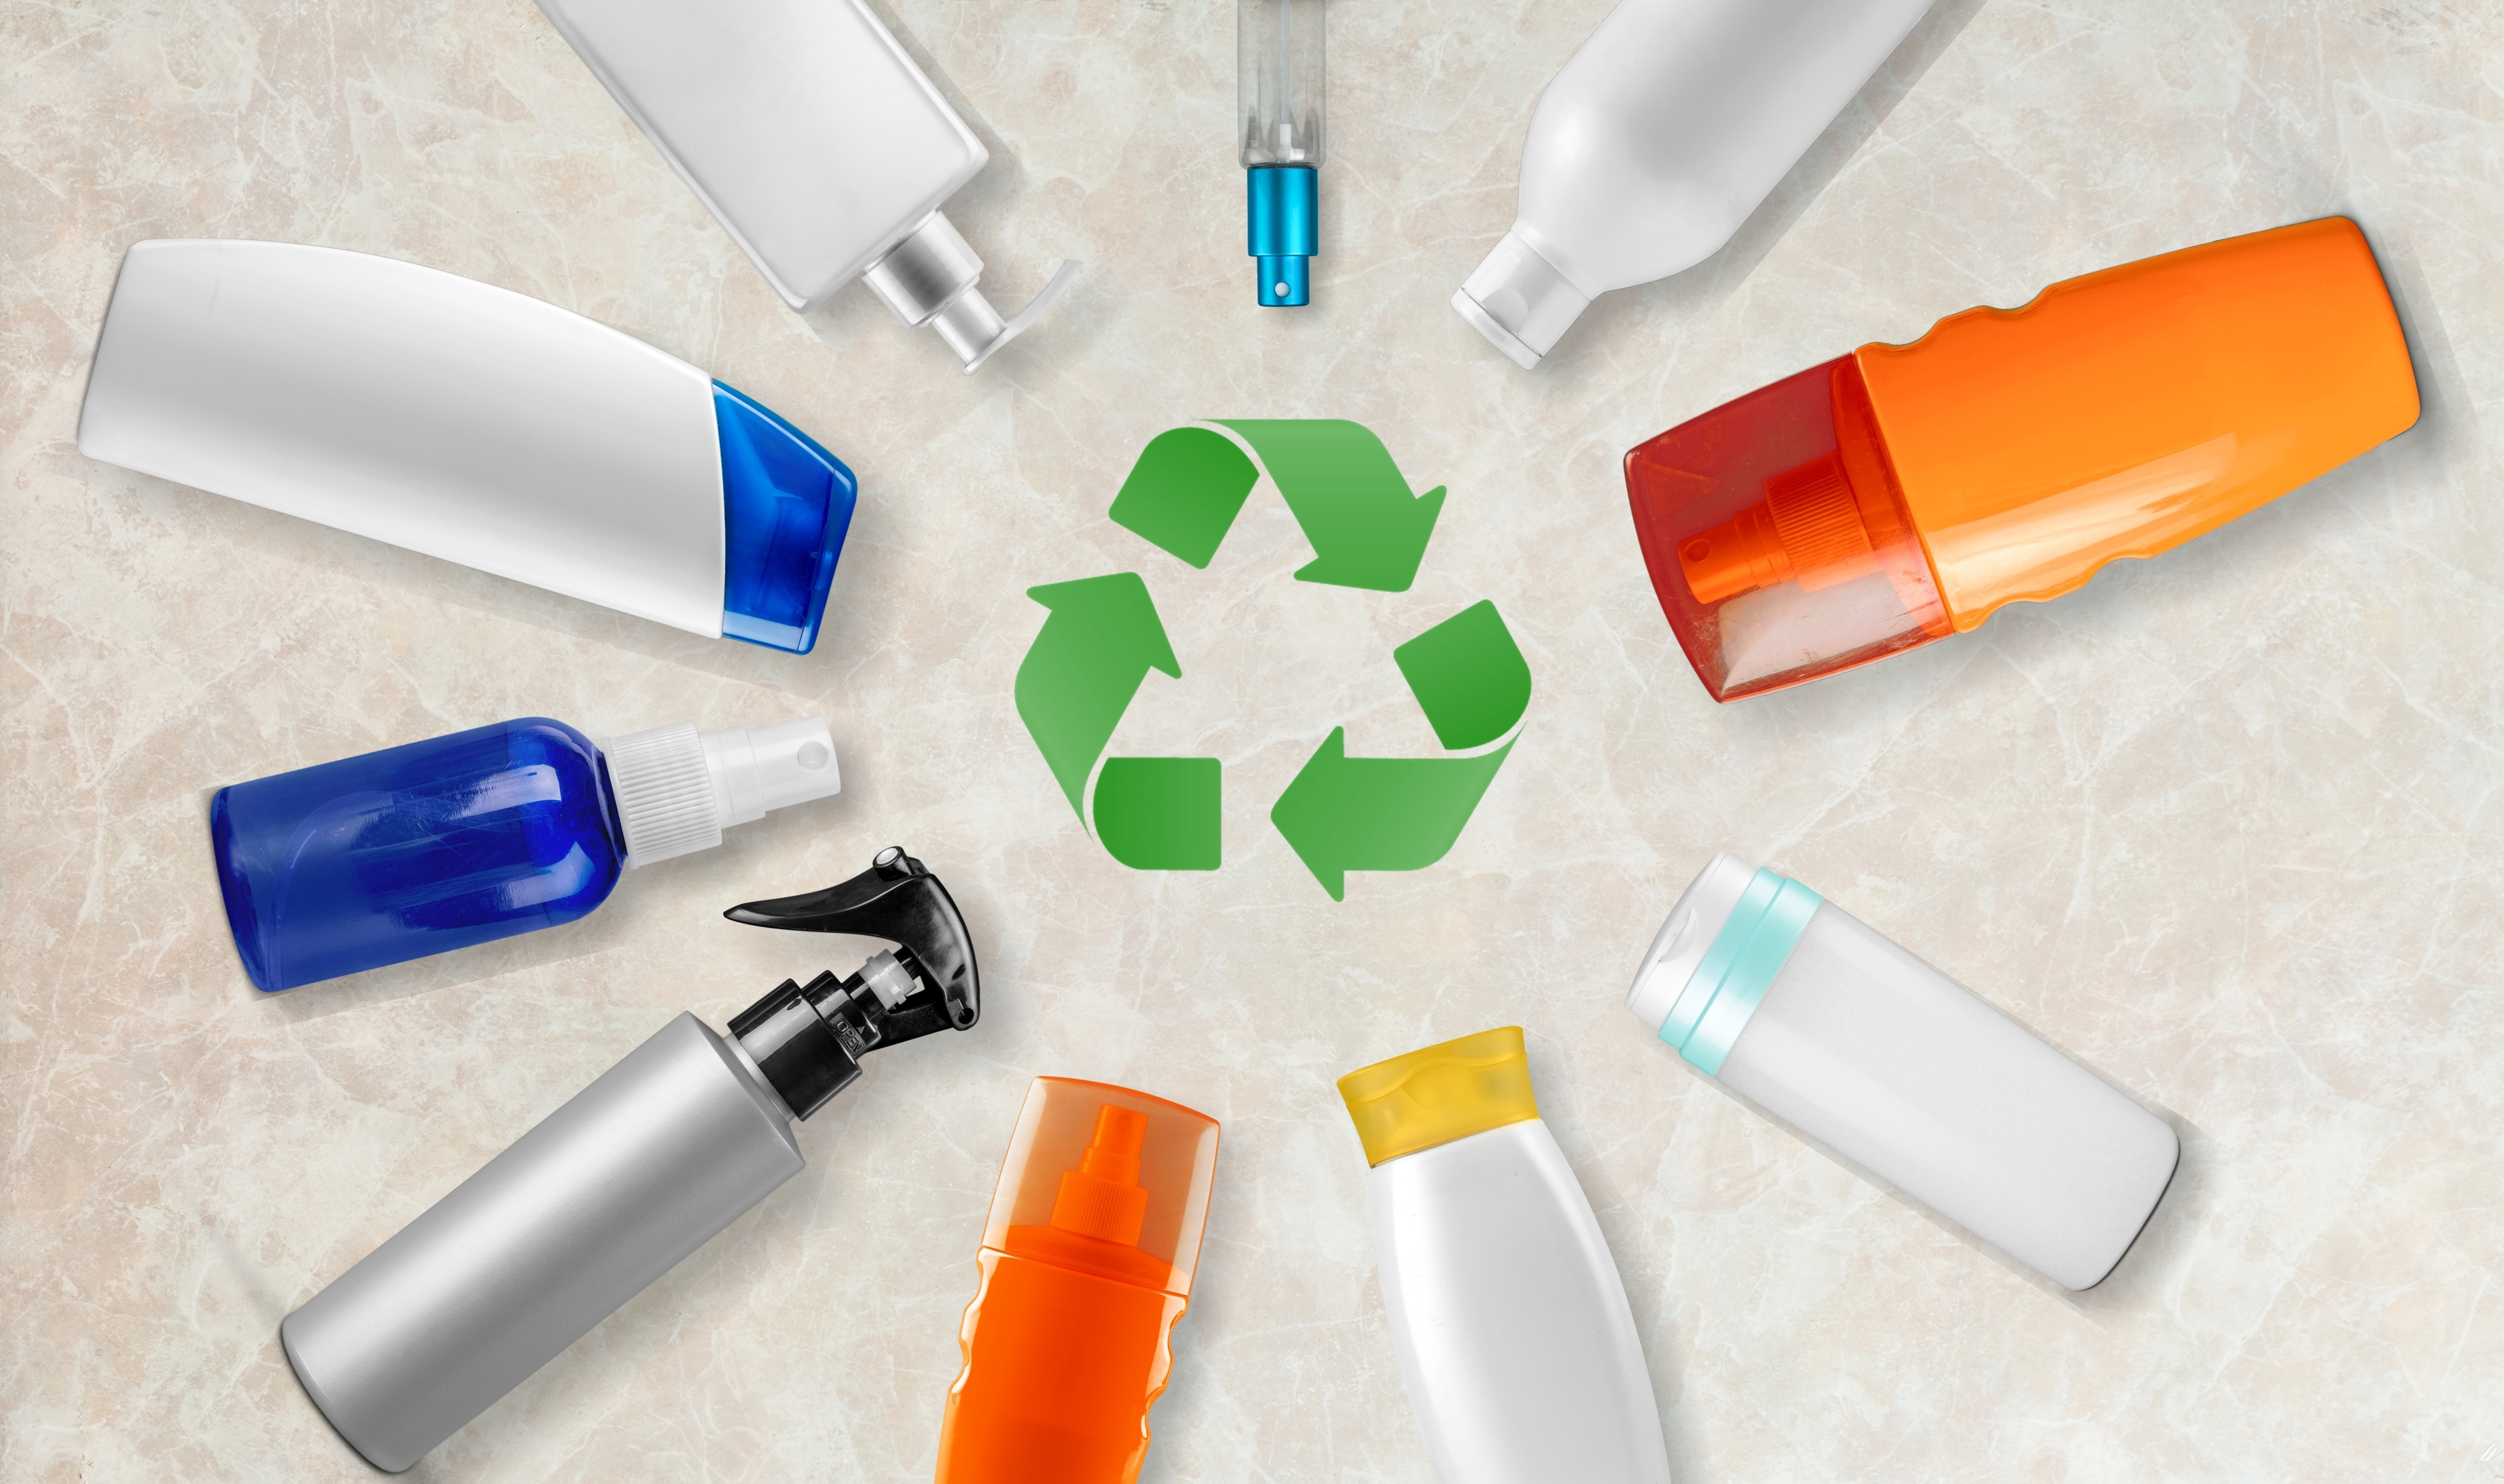 Plastic Bottles - RecycleMore